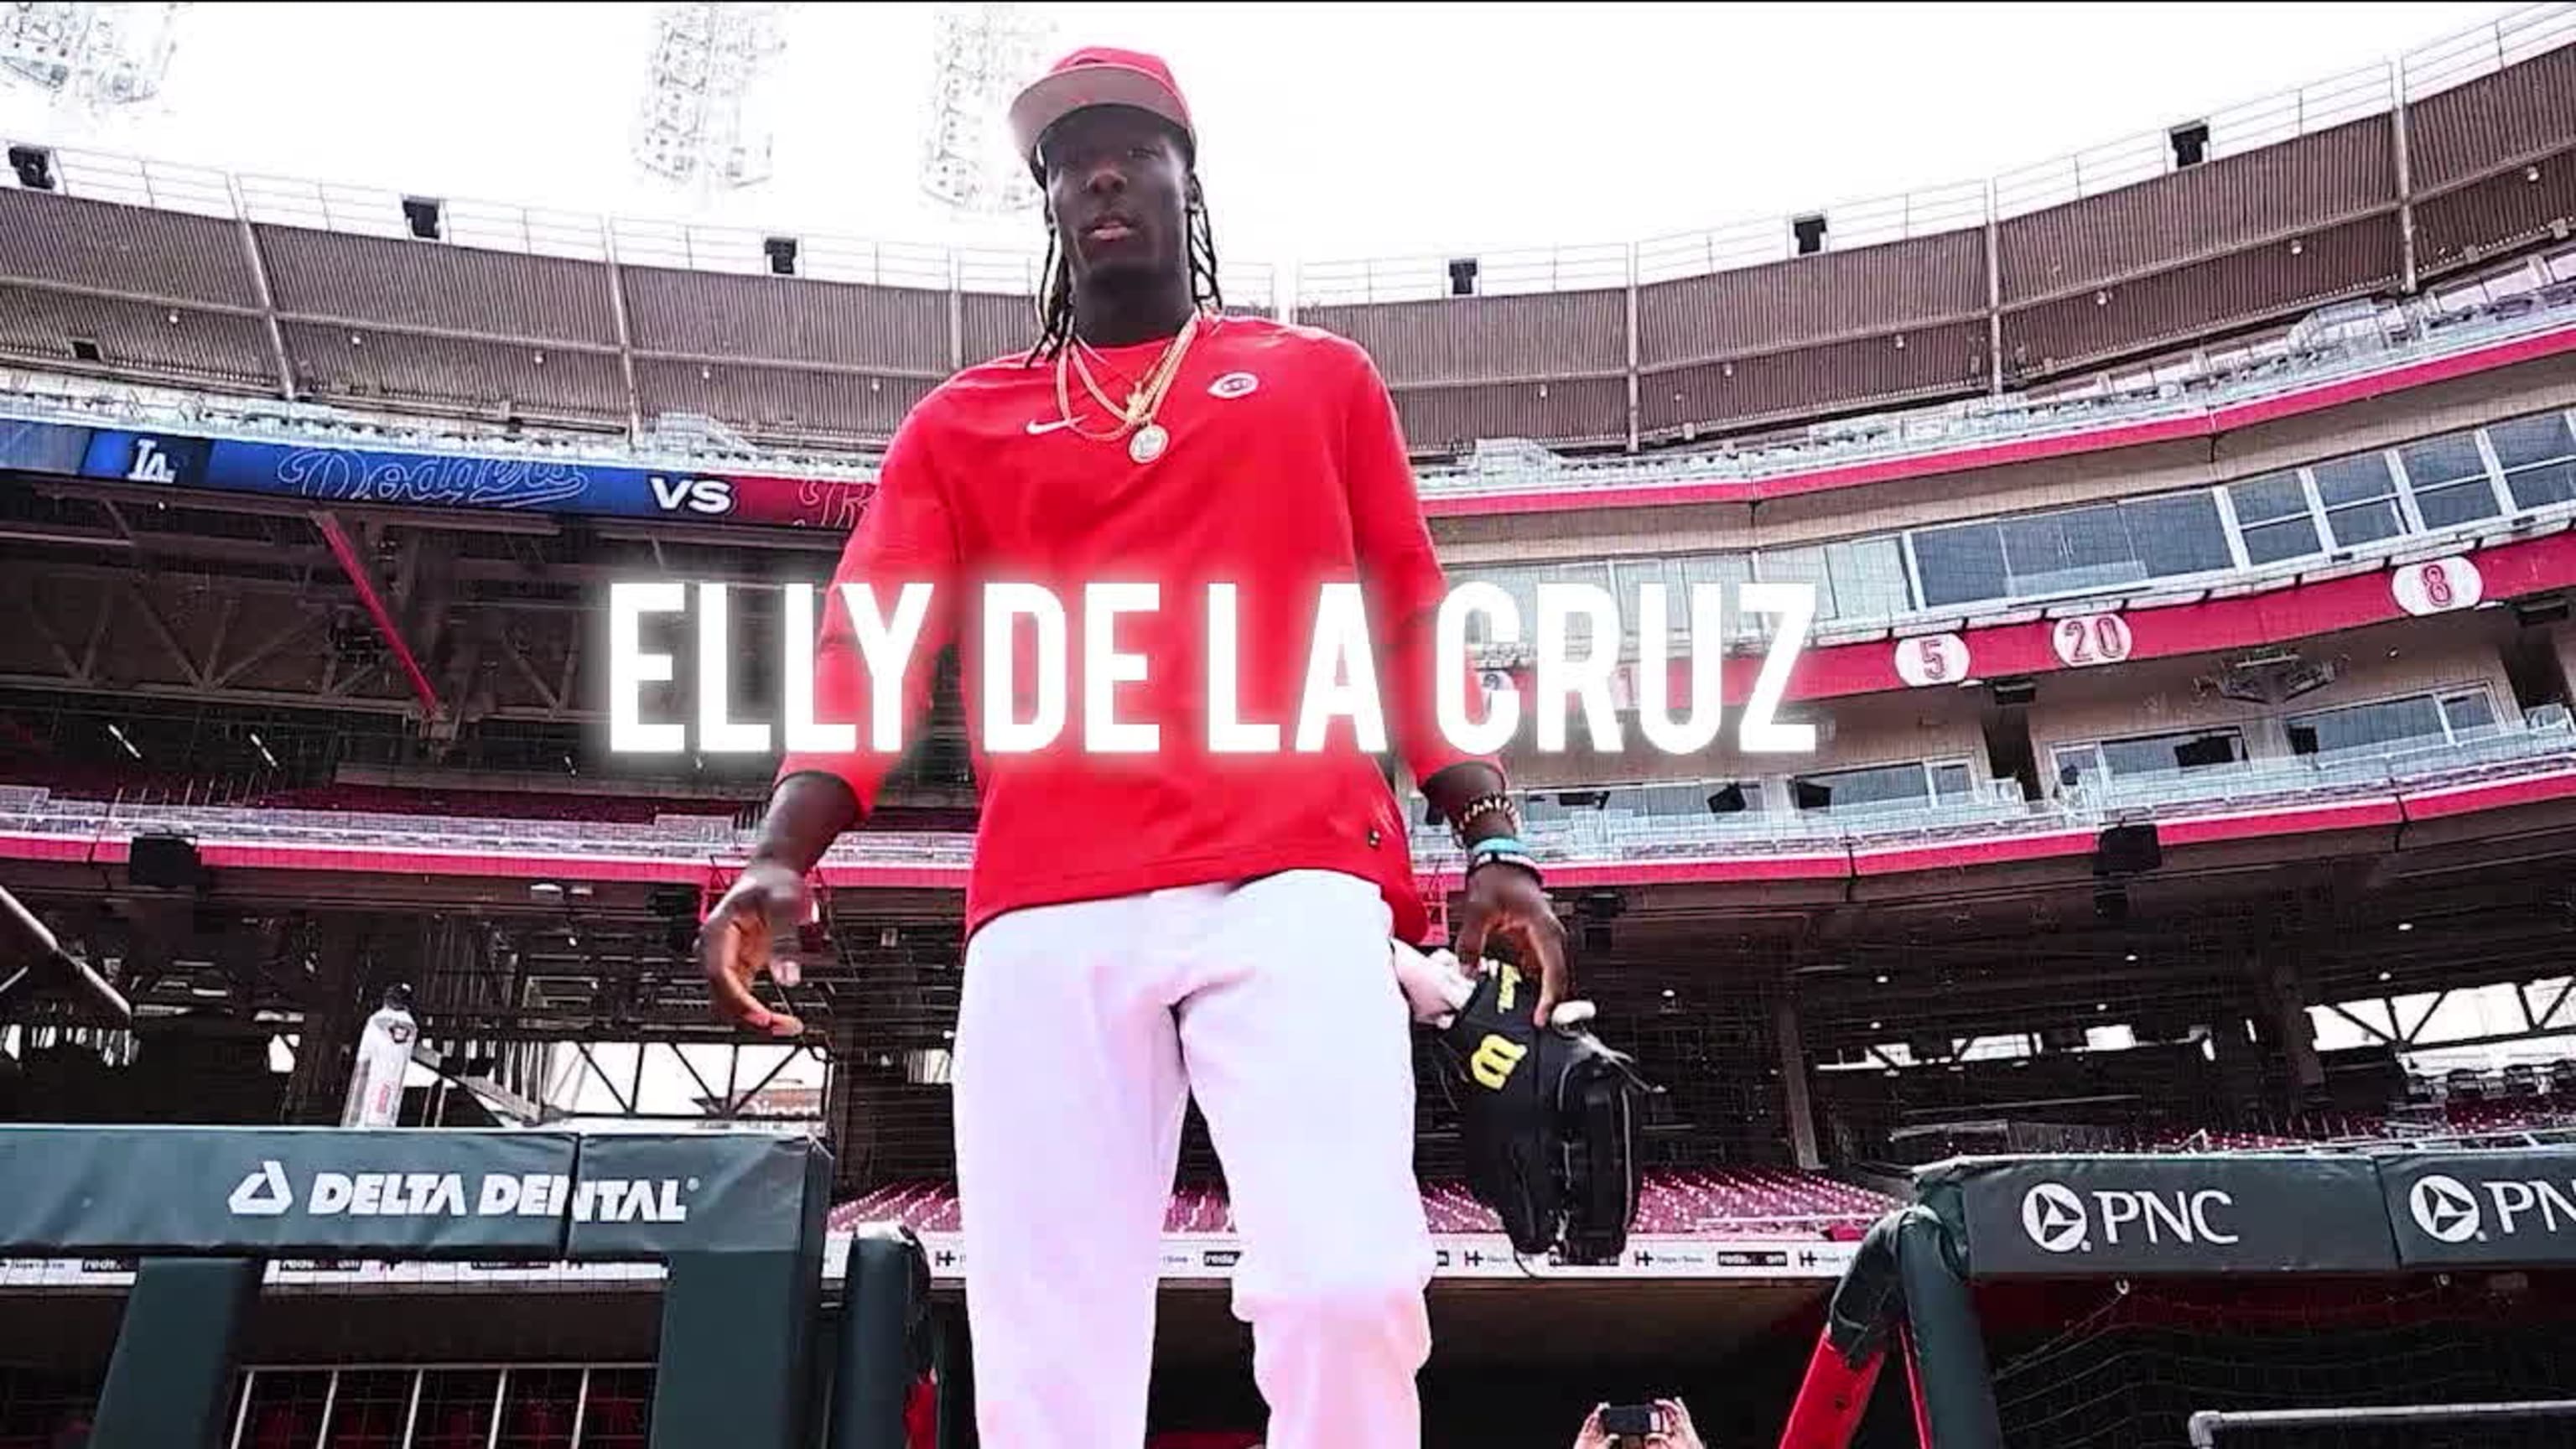 How Elly De La Cruz Electrified the Cincinnati Reds - The New York